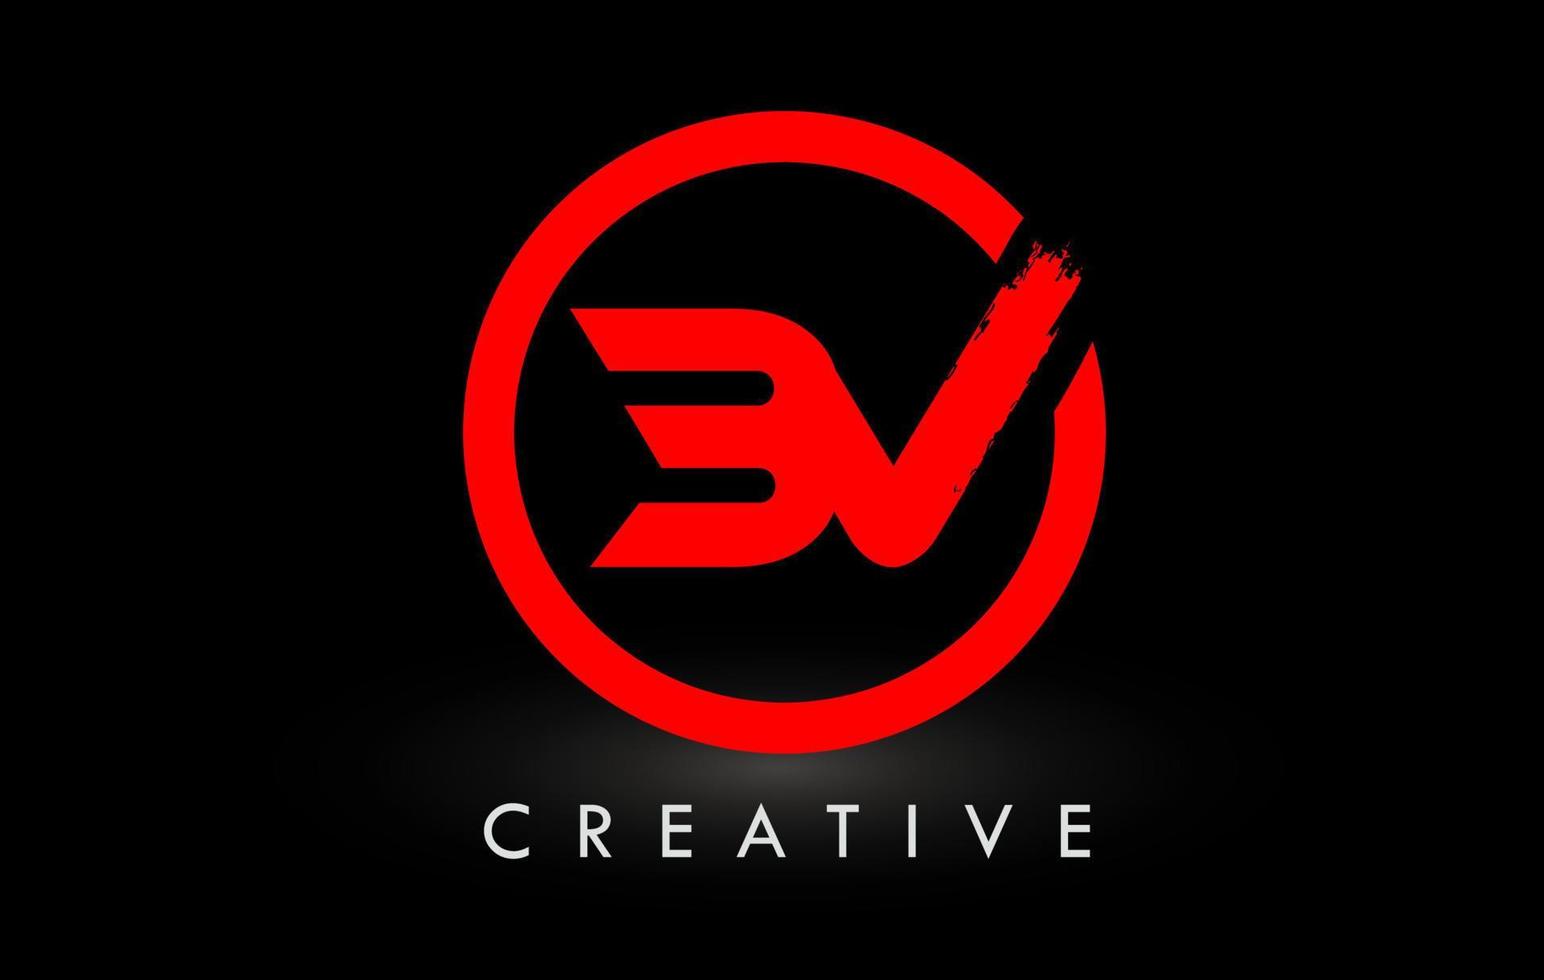 Red BV Brush Letter Logo Design. Creative Brushed Letters Icon Logo. vector